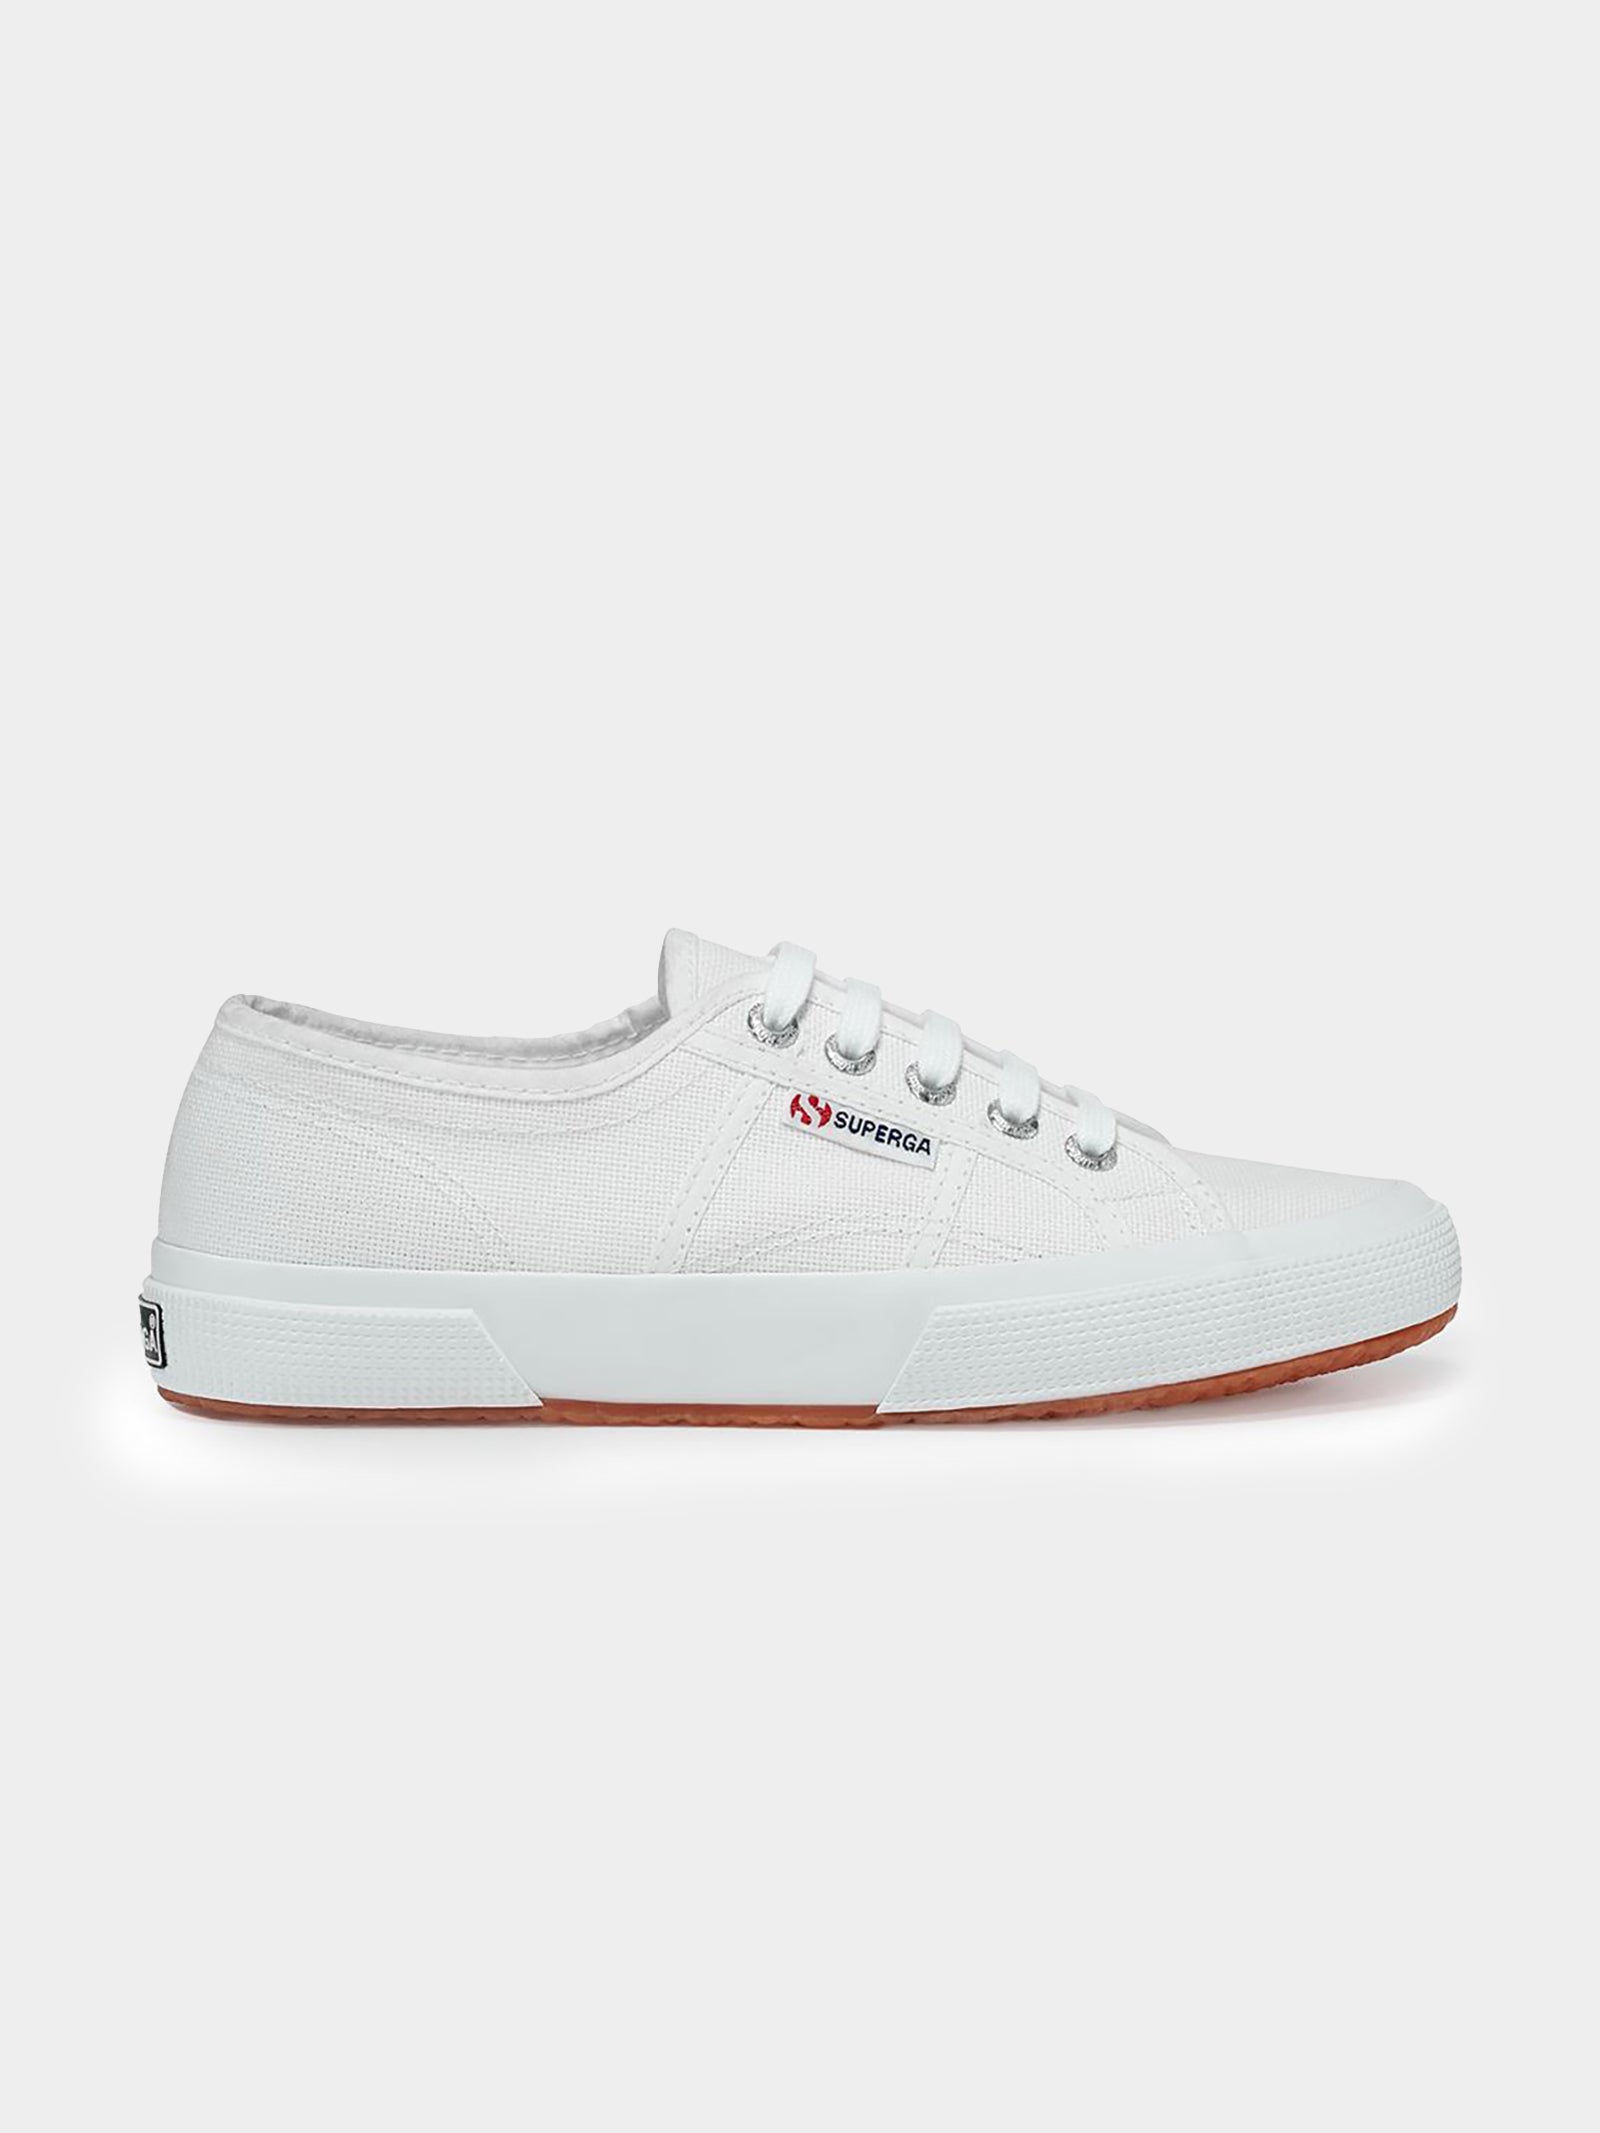 Unisex 2750 Cotu Classic Sneaker in White Canvas